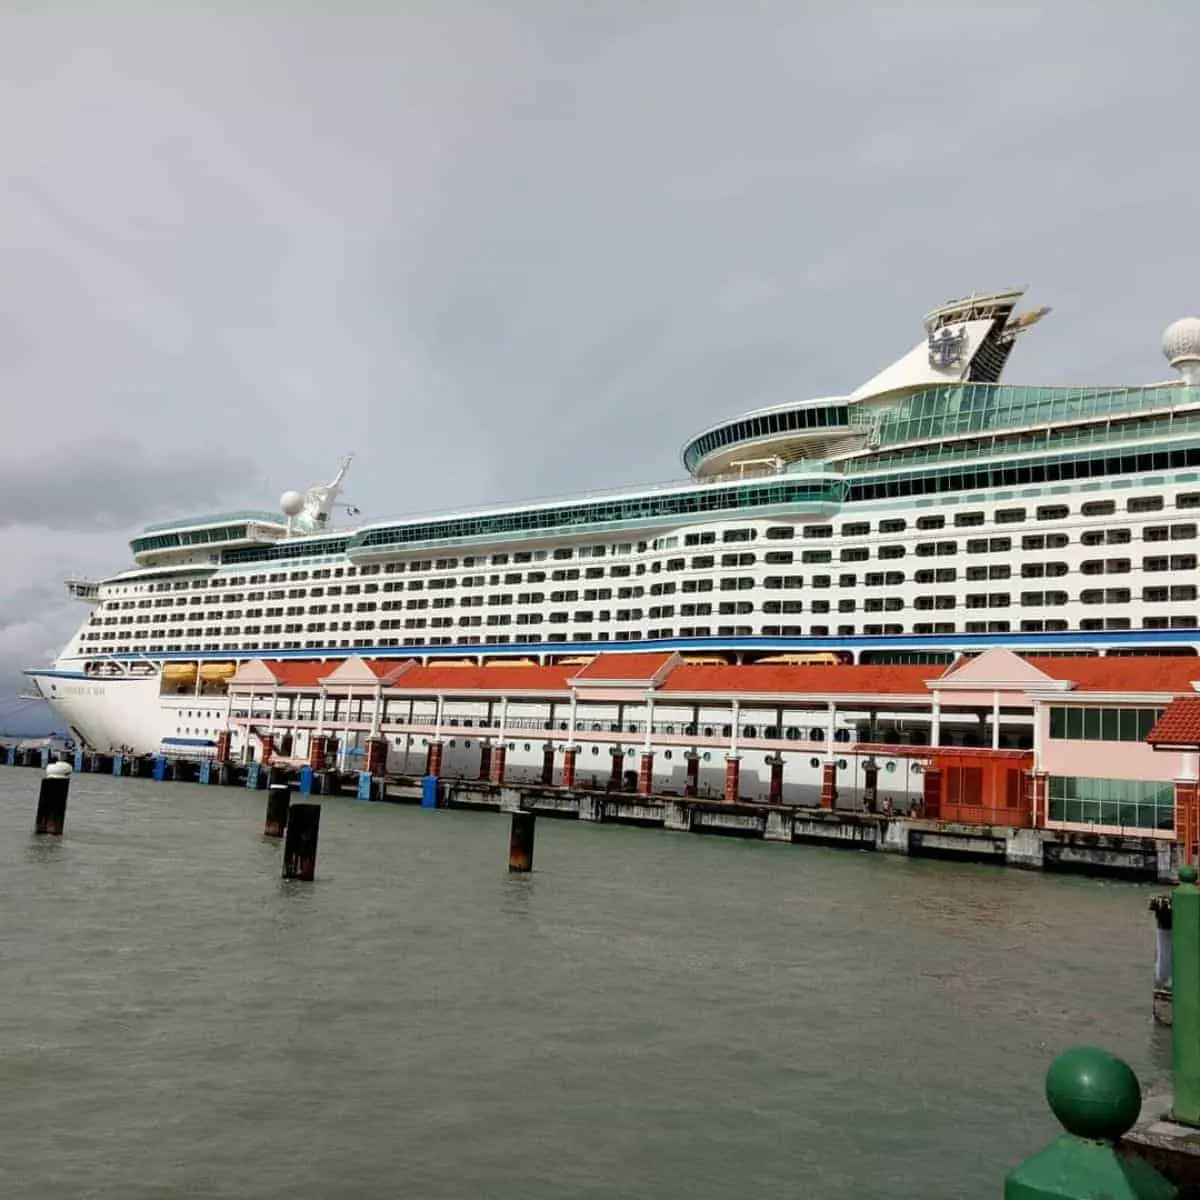 Gigantic Royal Carribean Cruise Ship with wonderful amenities